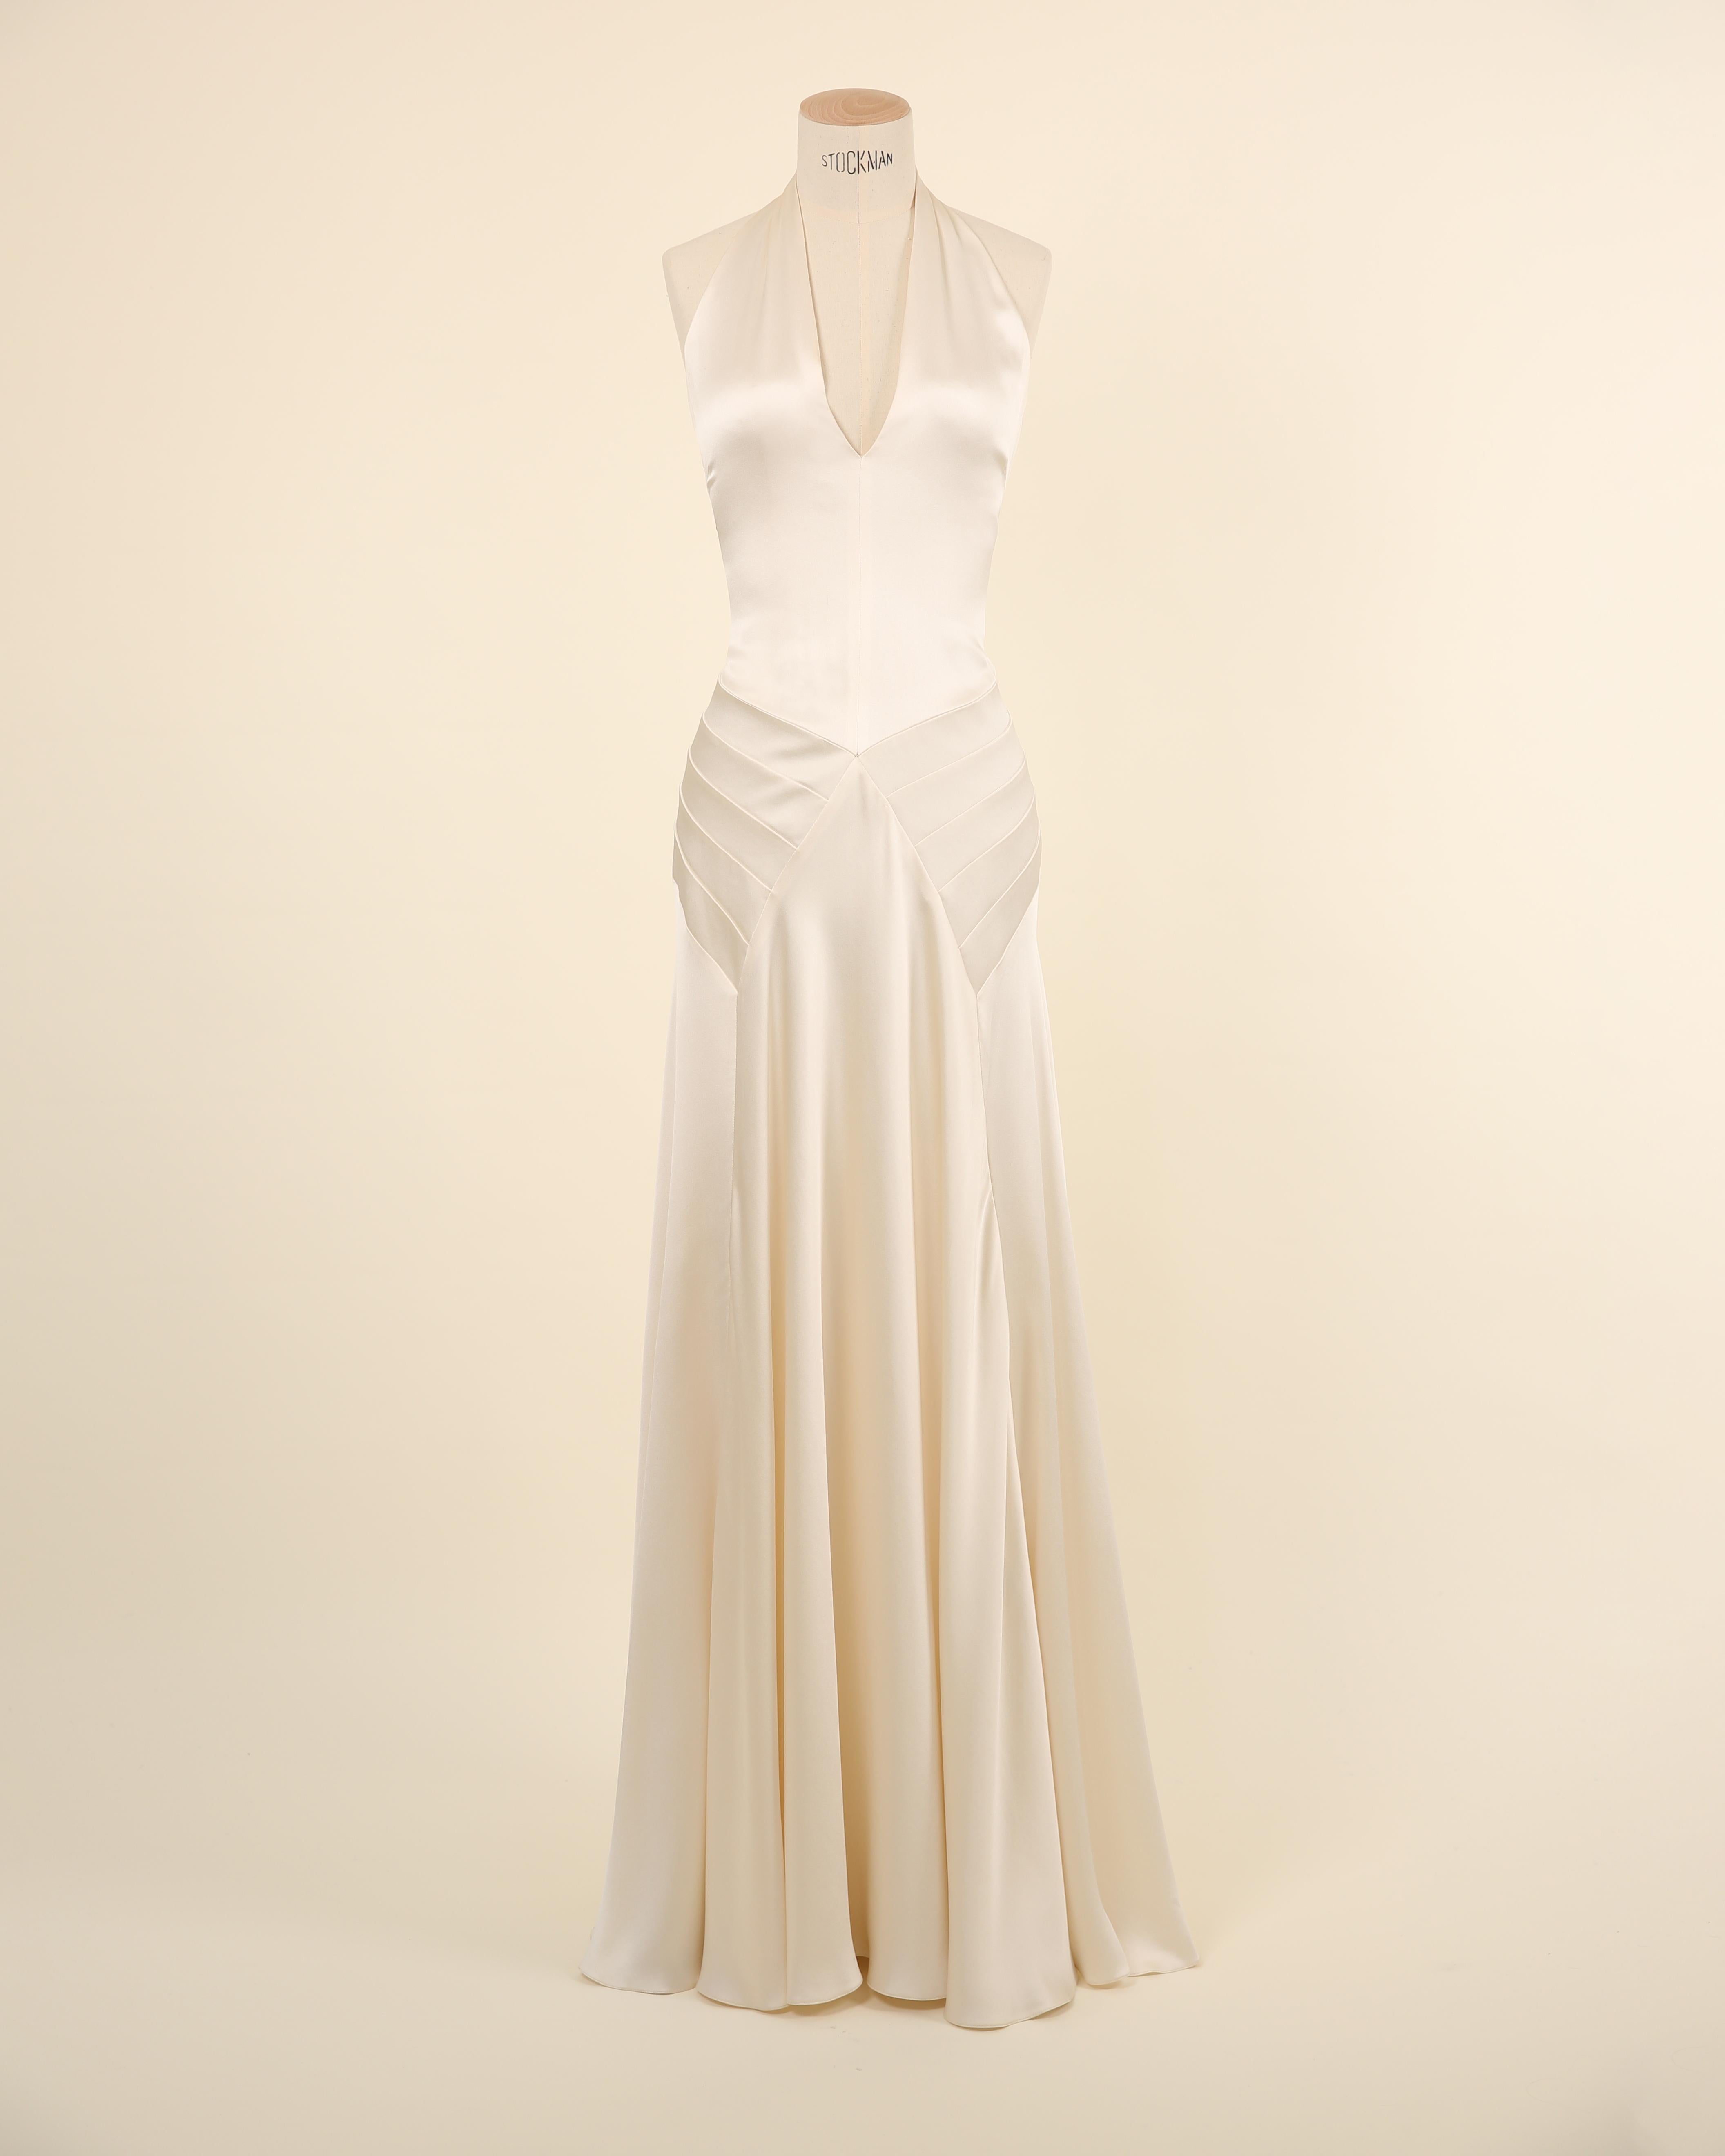 Ralph Lauren S/S 2009 white ivory silk plunging halter neck wedding gown dress In Good Condition For Sale In Paris, FR